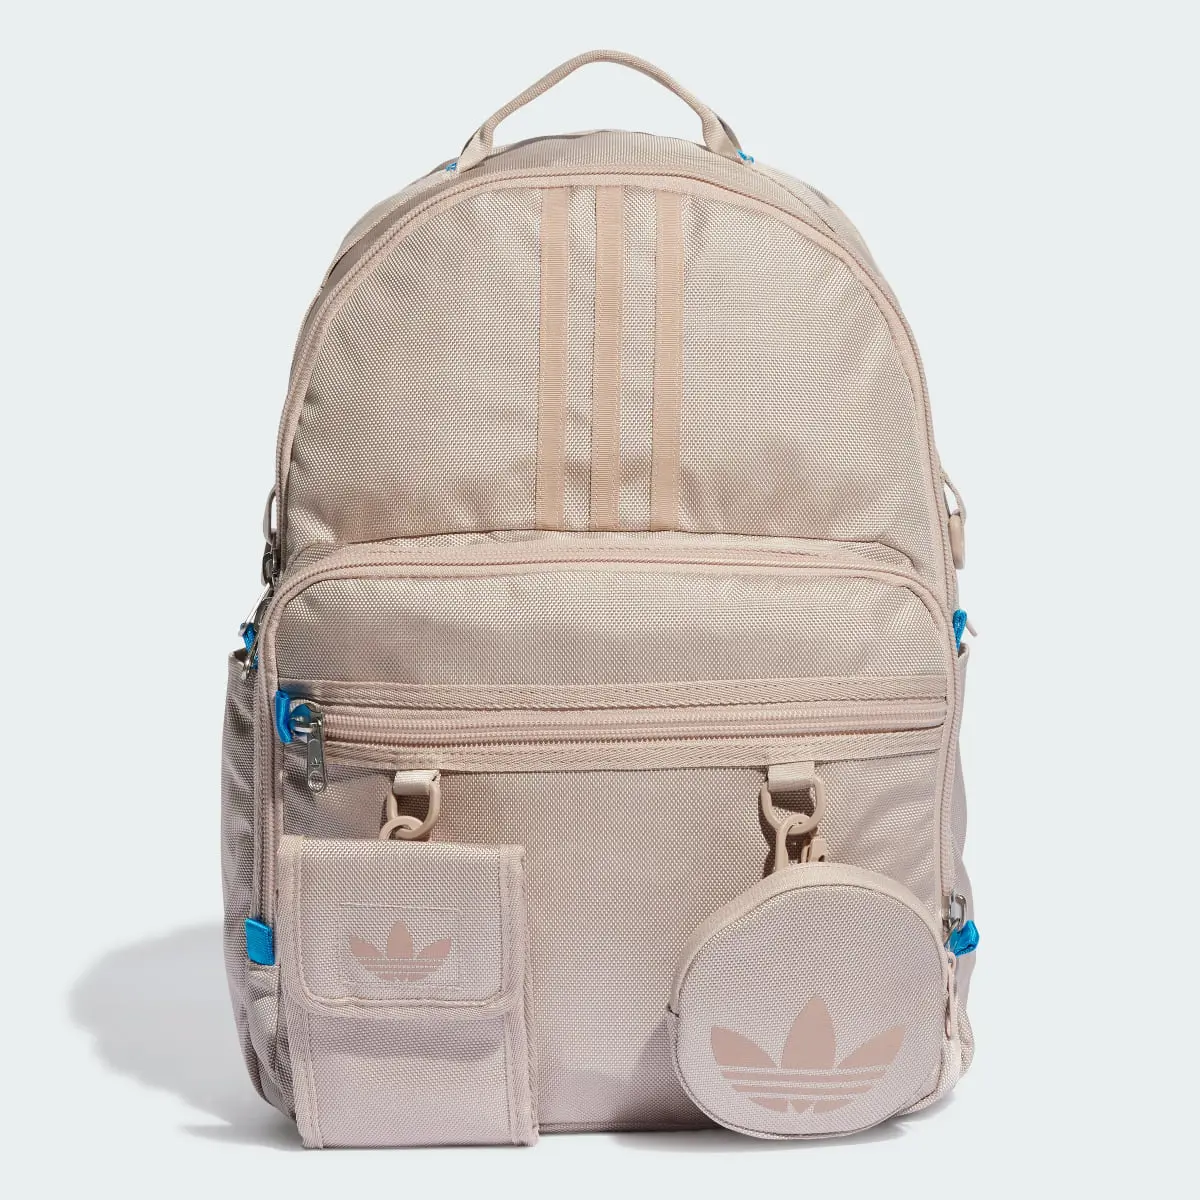 Adidas Originals Utility Backpack. 1